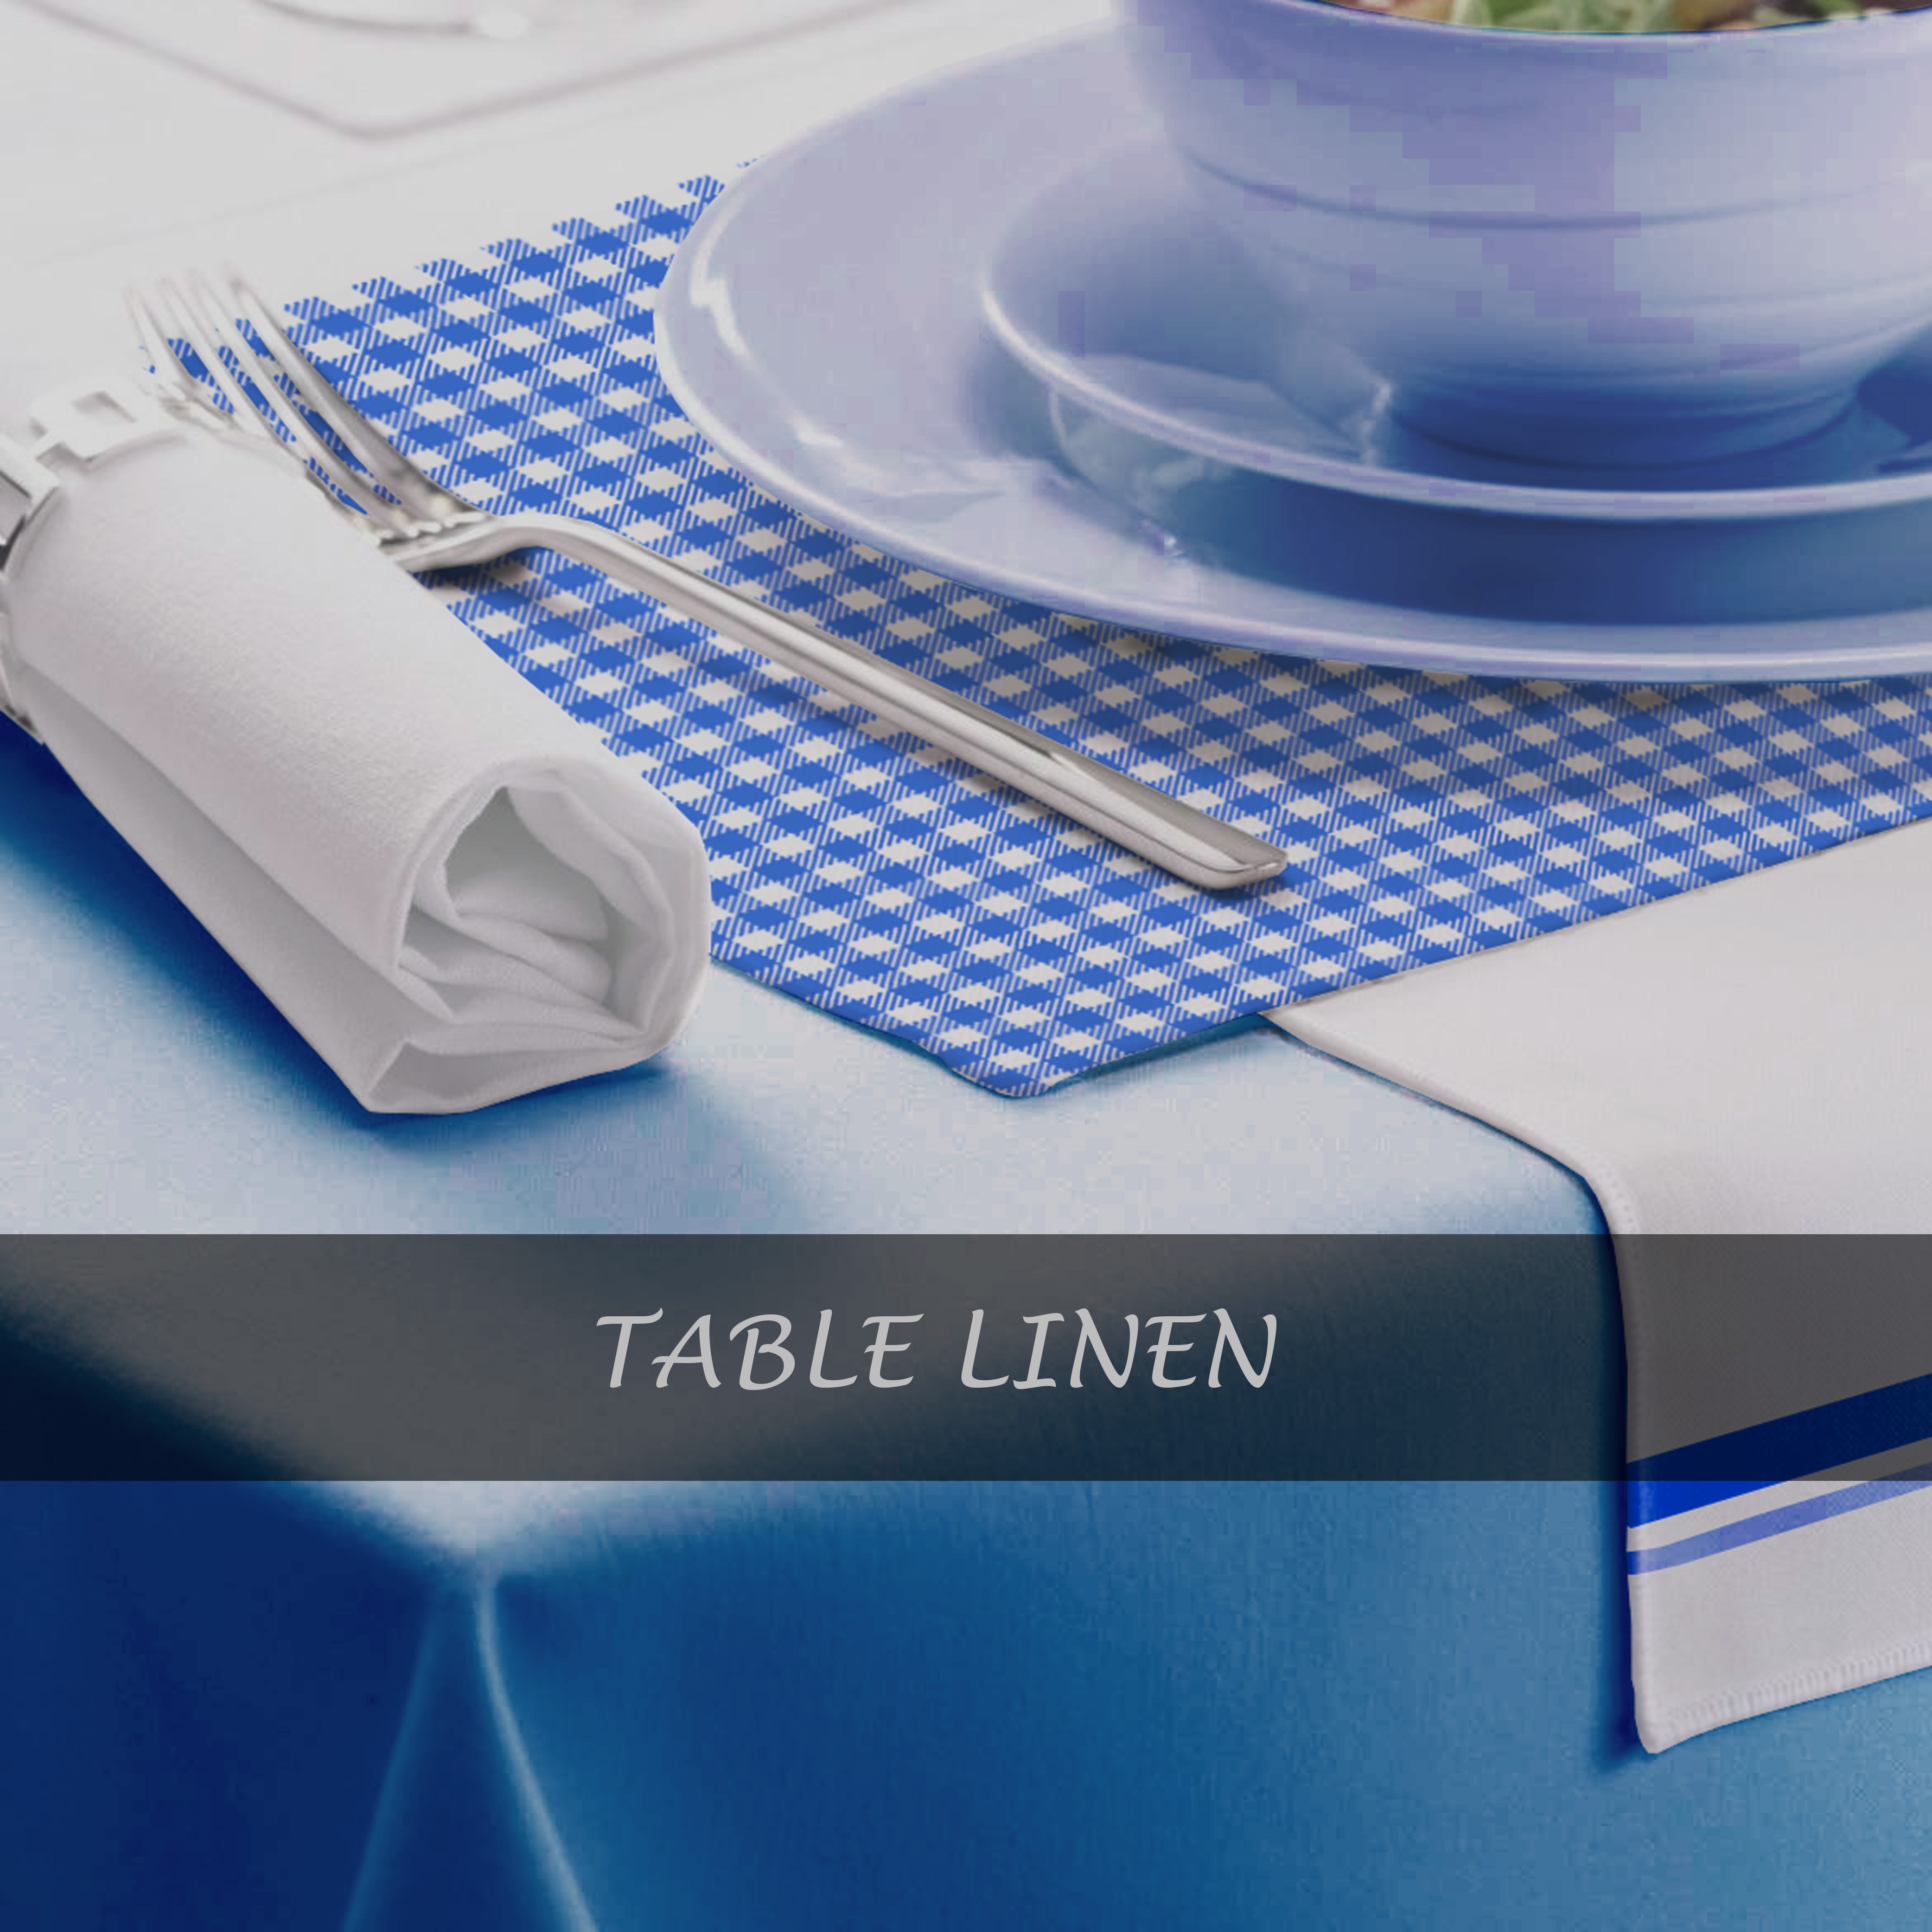 TABLE LINEN